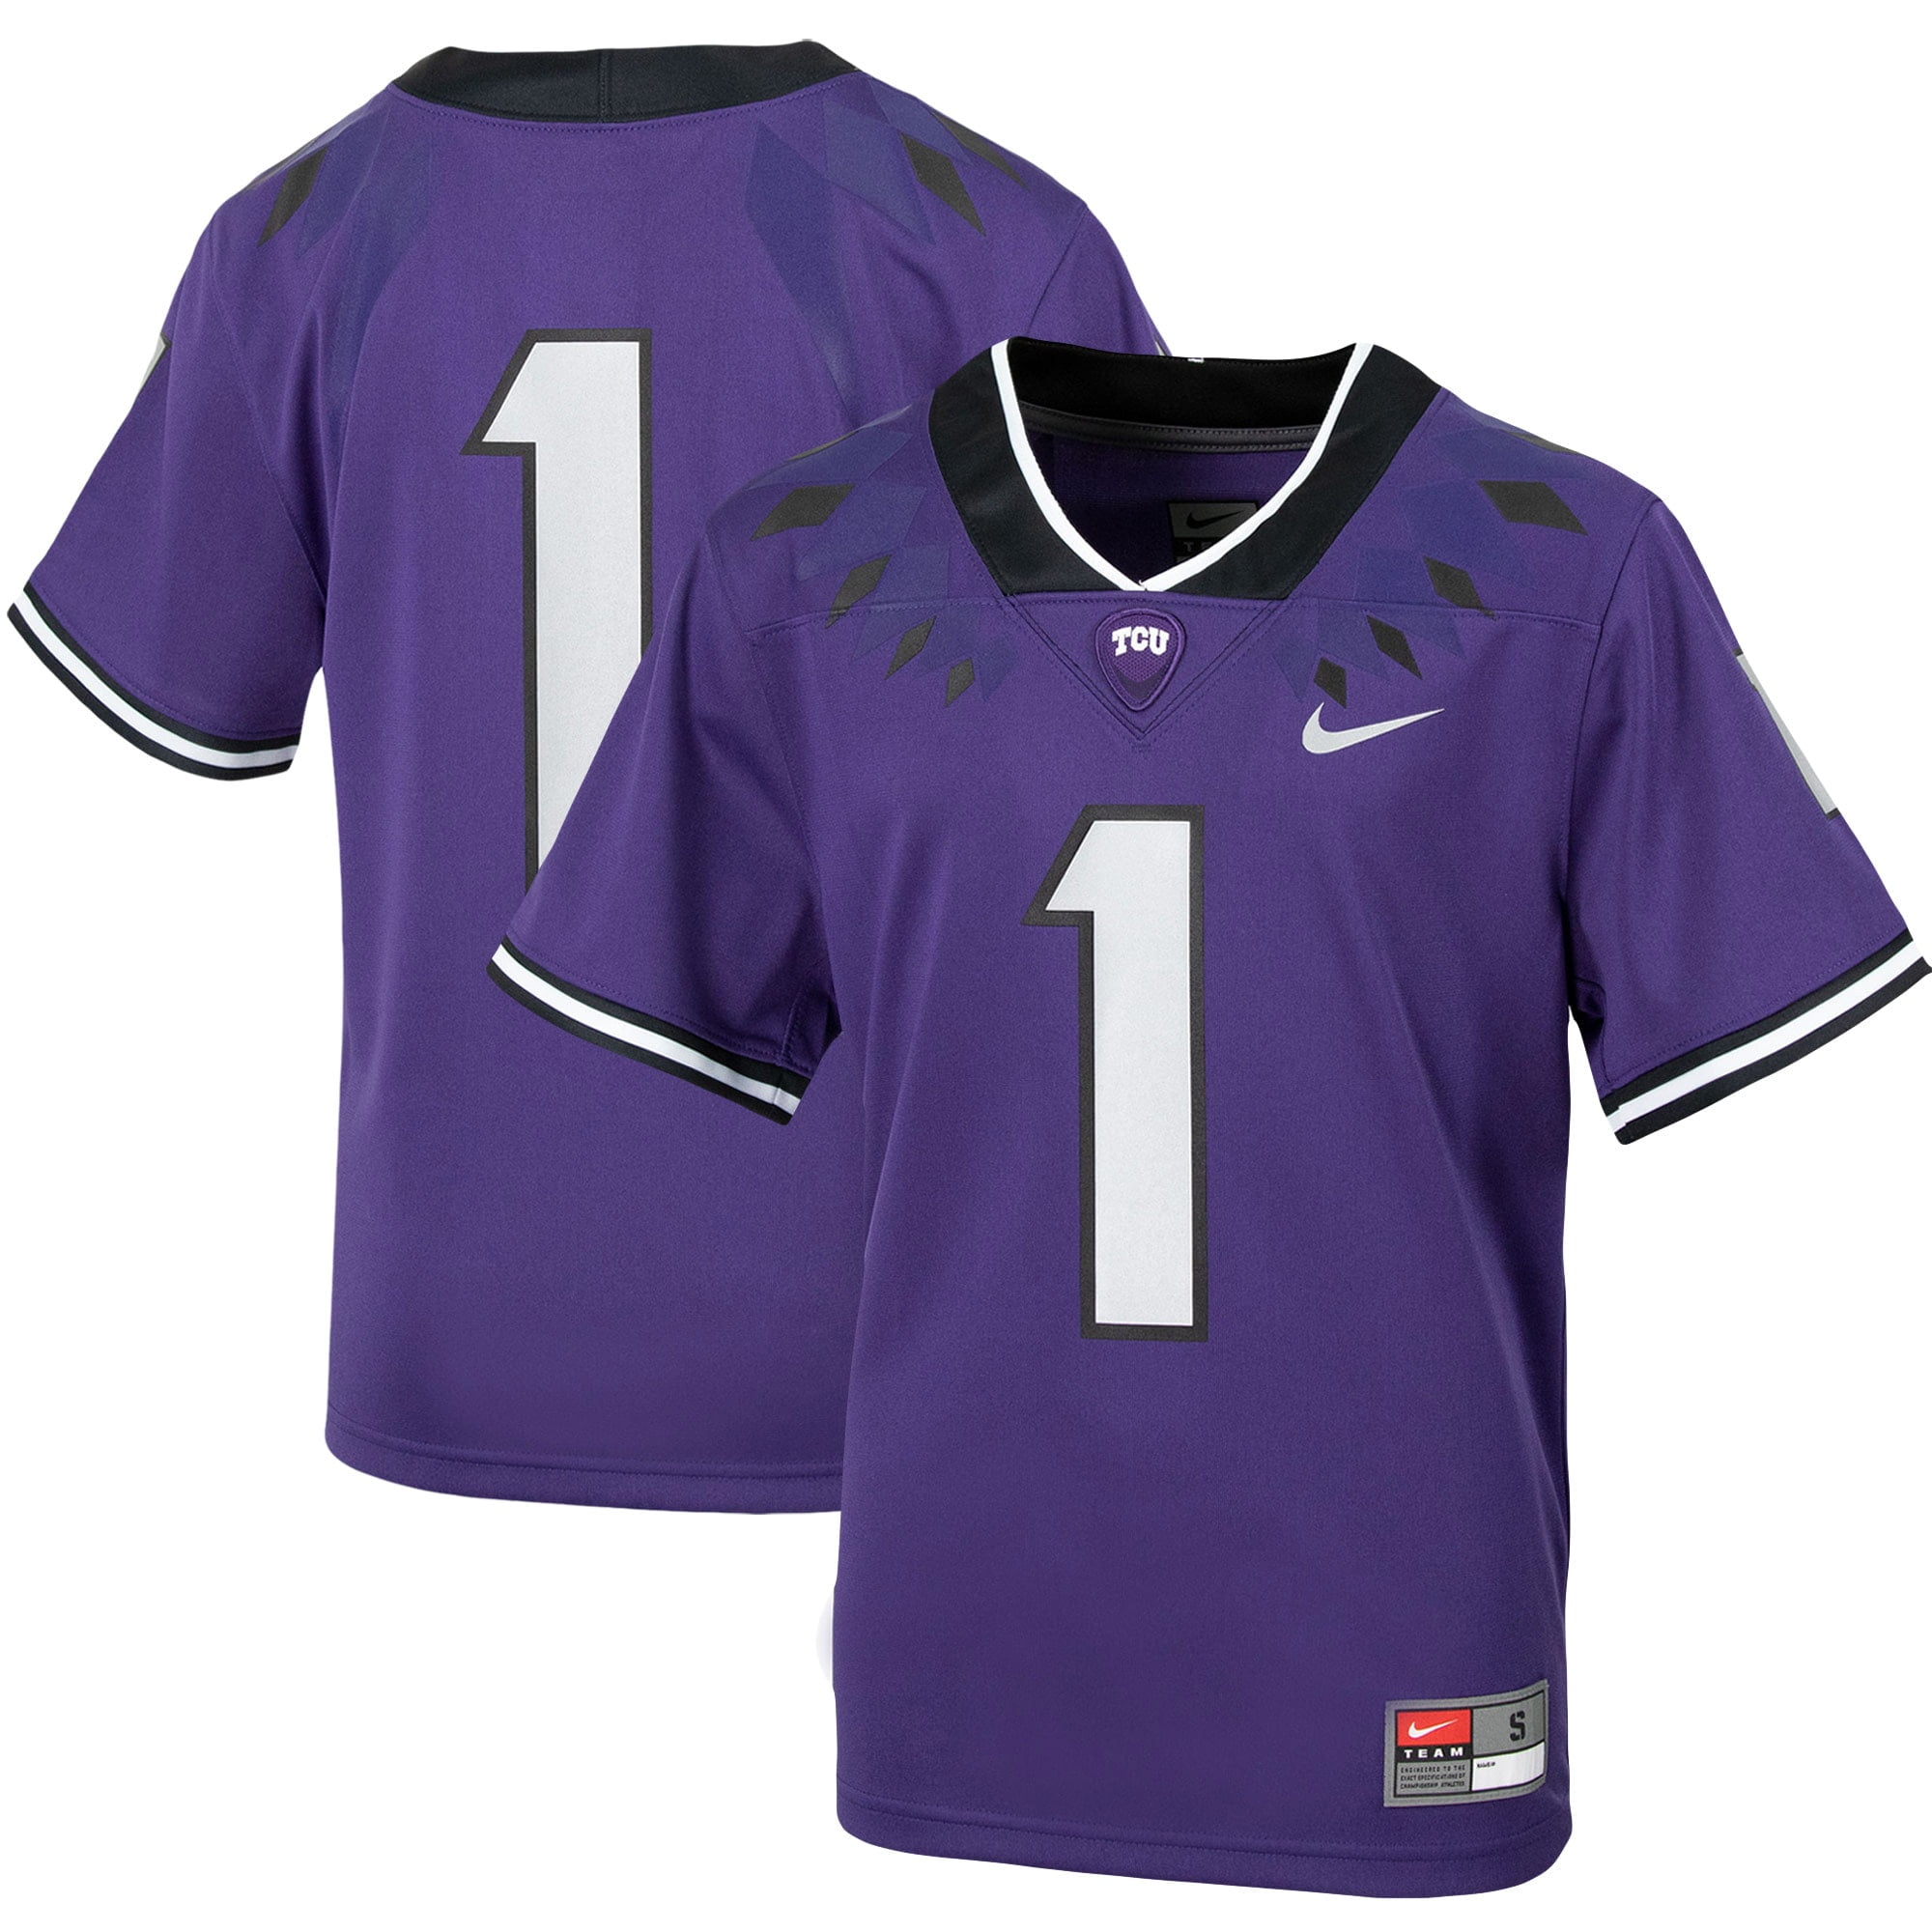 #1 TCU Horned Frogs Nike Youth Untouchable Football Jersey - Purple